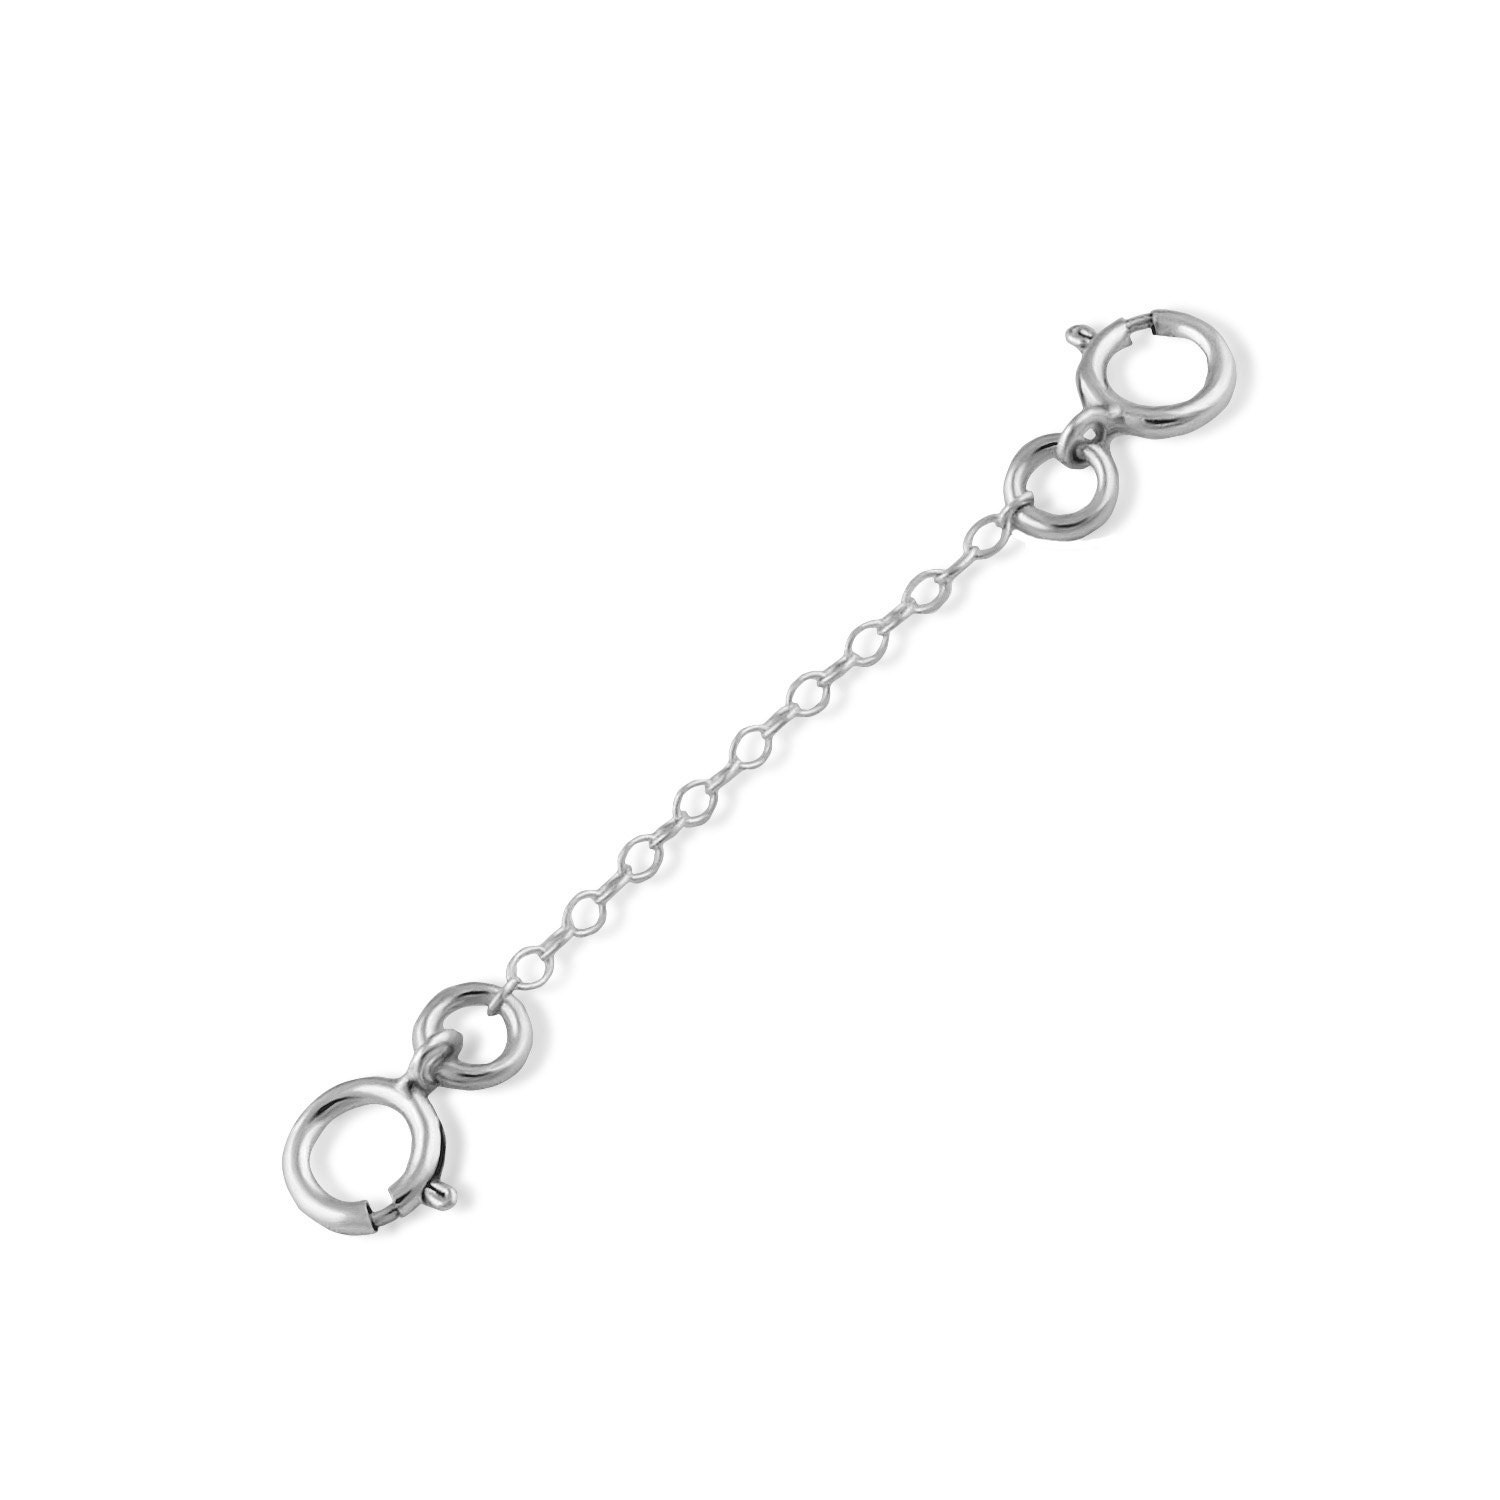 Diamond Tennis Bracelet with safety chain